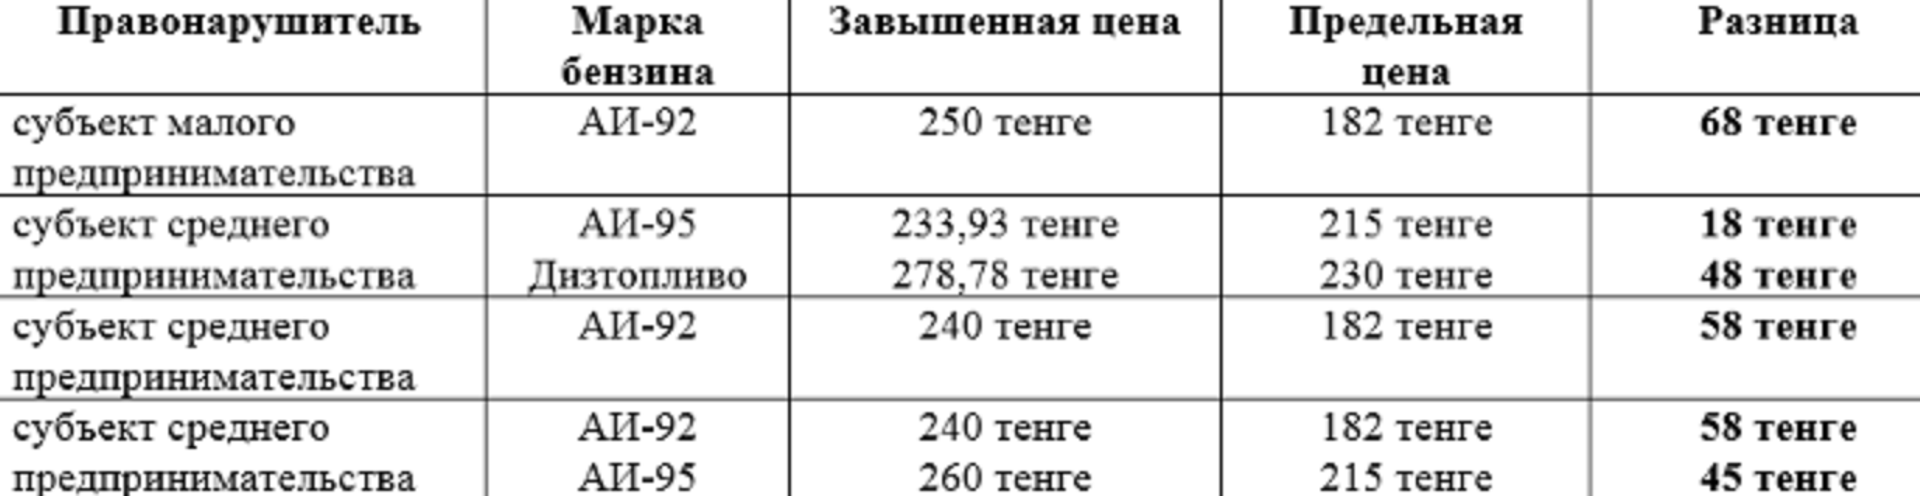 Закупки по завышенным ценам - Sputnik Казахстан, 1920, 17.02.2022